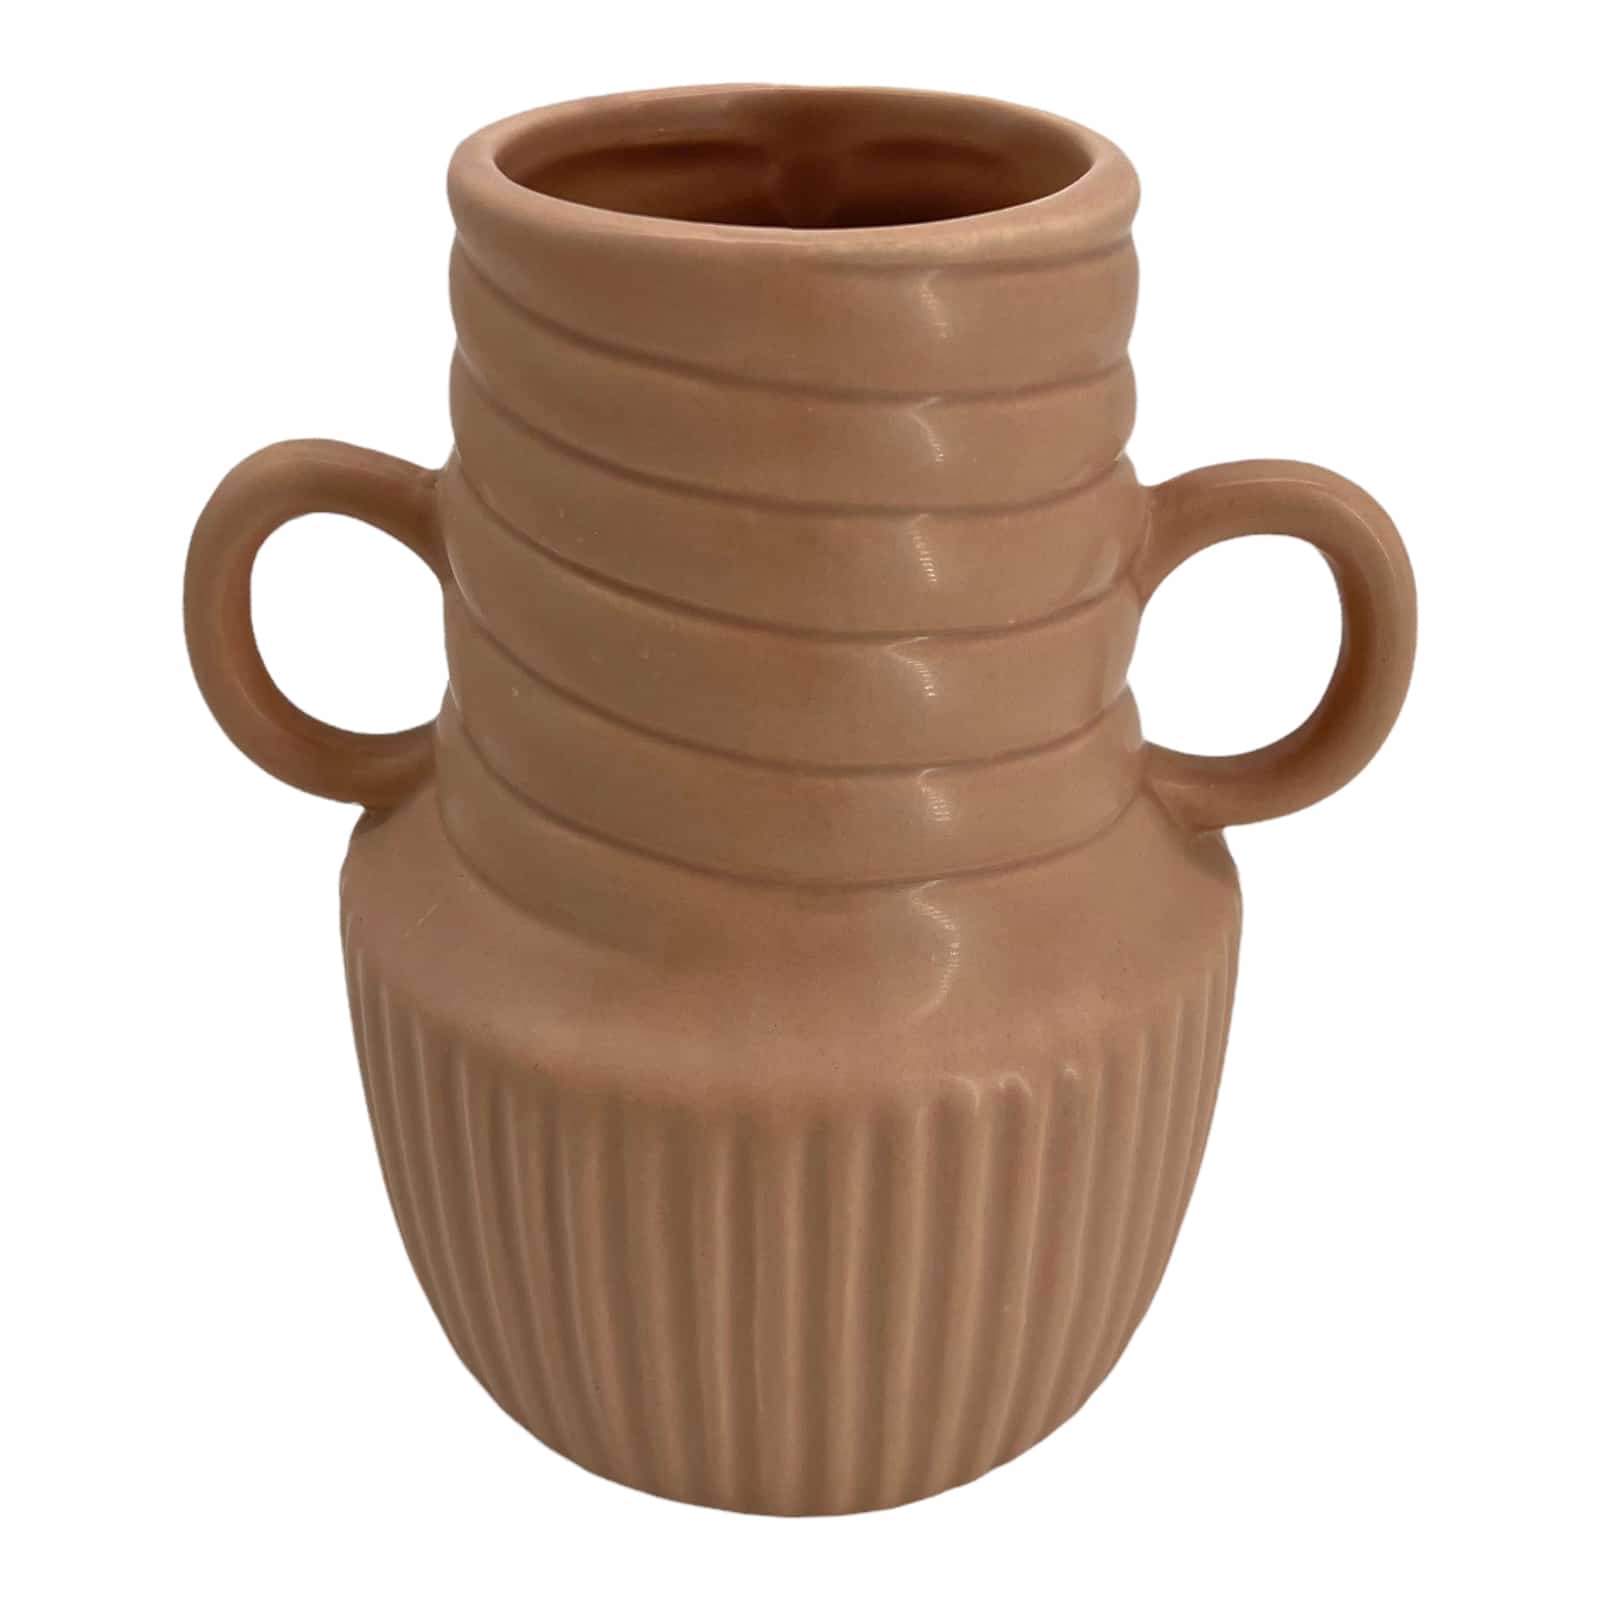 Keramikvase - altrosa